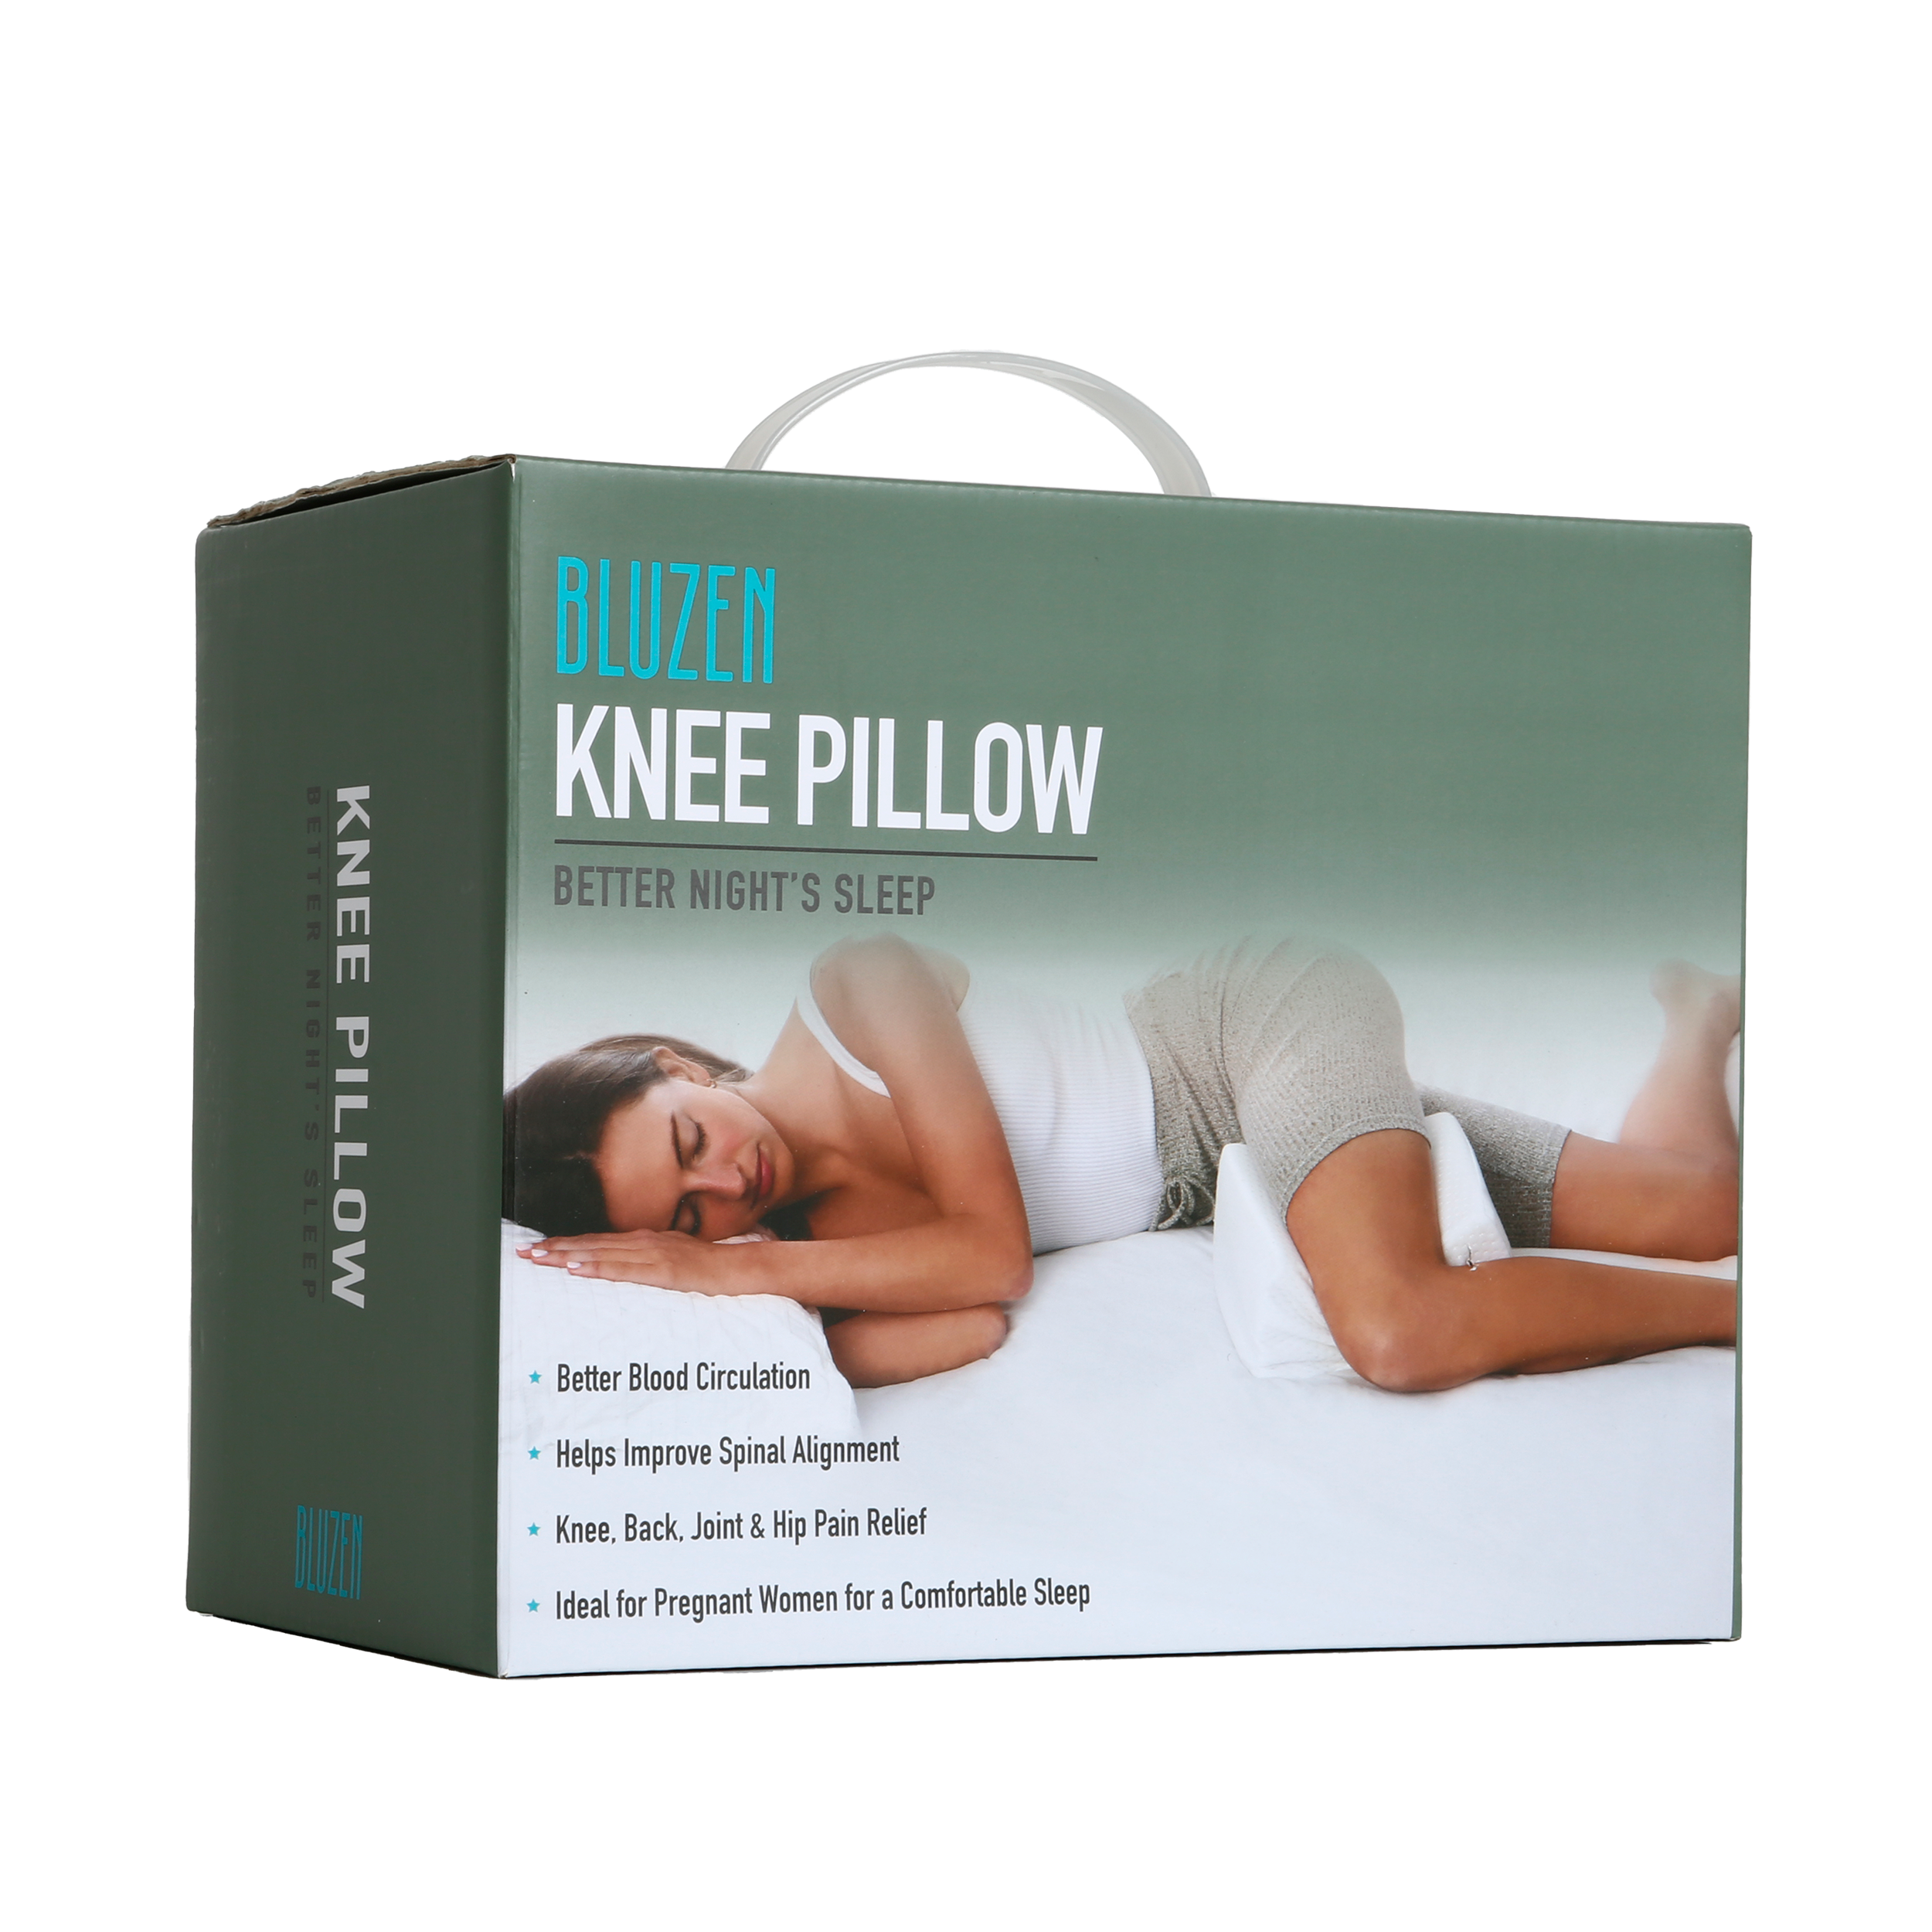 Knee Pillow